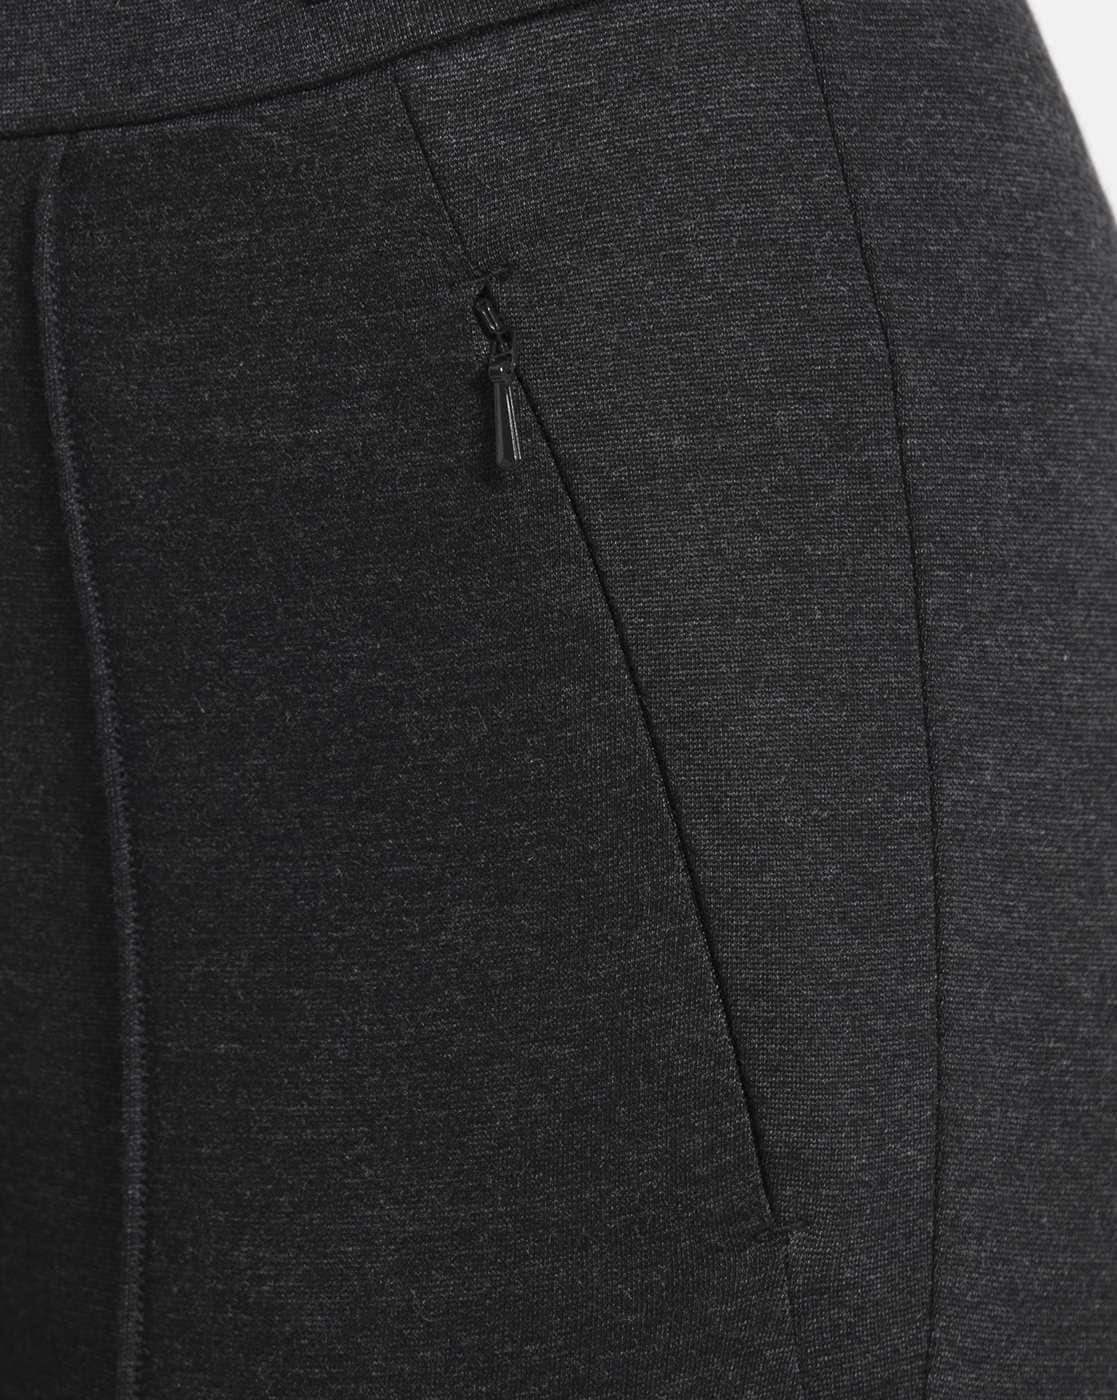 Jockey Black Solid Slim Fit Treggings for Women's-IW05BLK